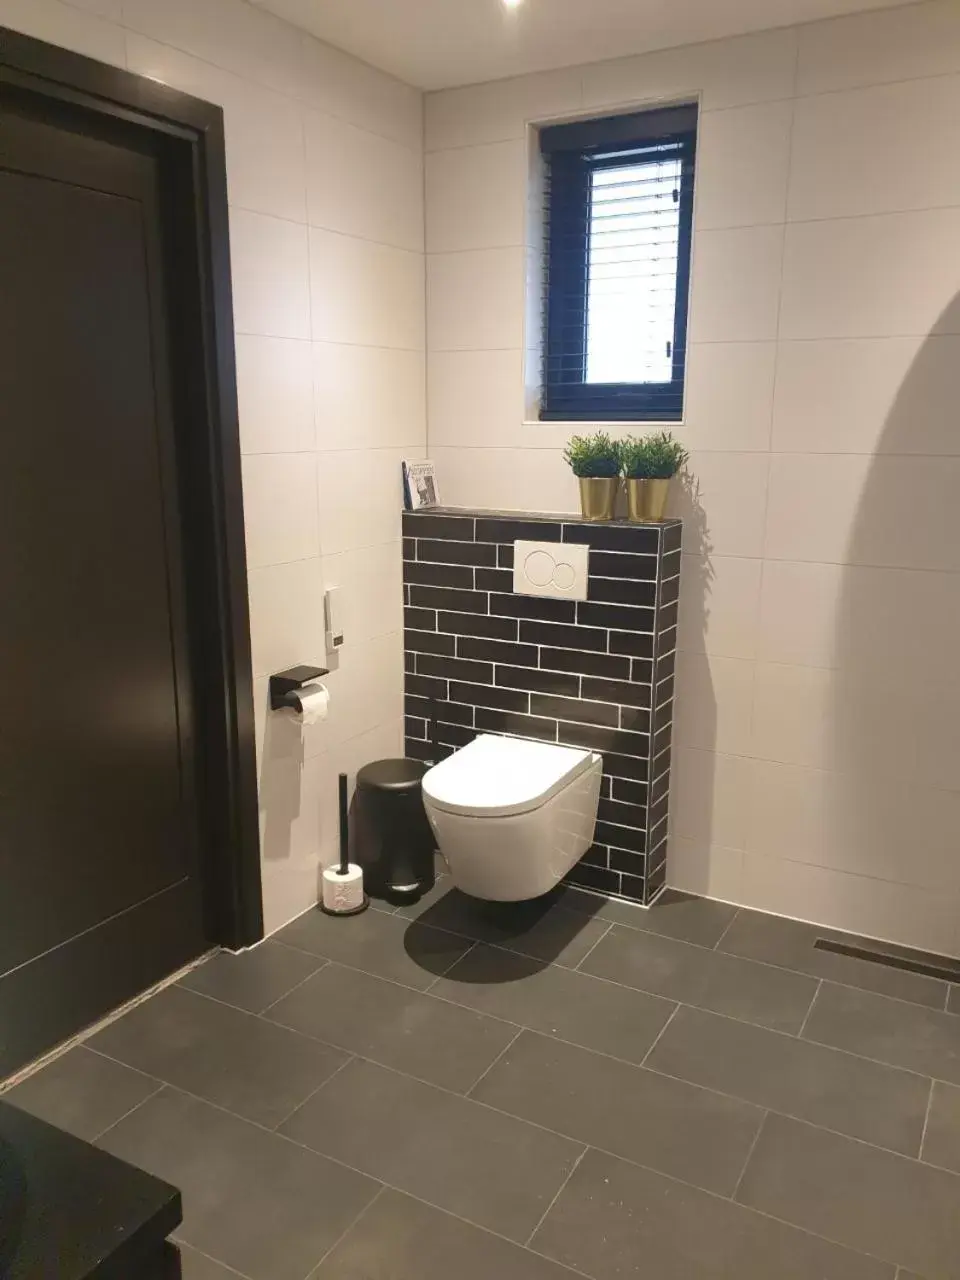 Bathroom in Ruunerwoldse Stekkie met eigen badkamer